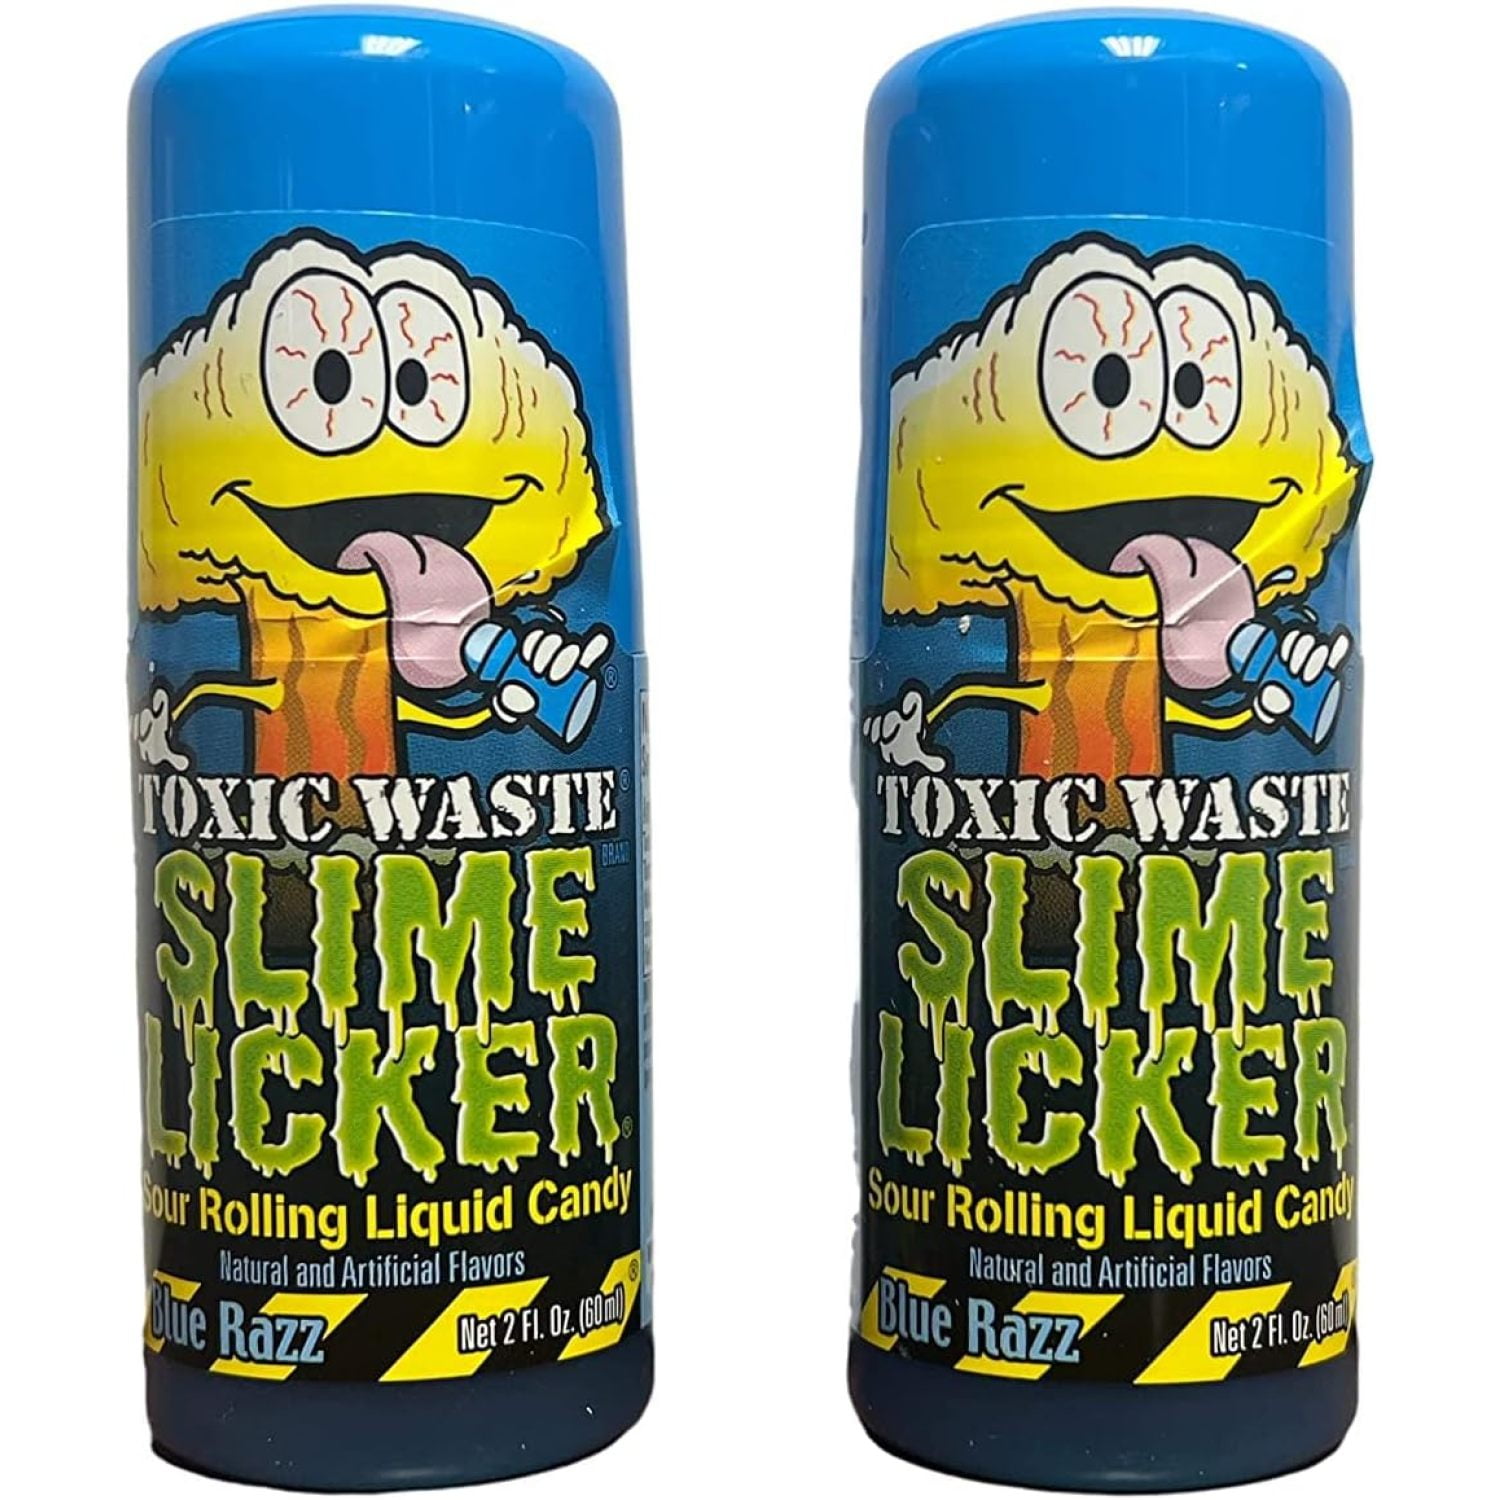 Mega Toxic Waste Slime Licker Blue Razz Halloween Costume Boy Girl